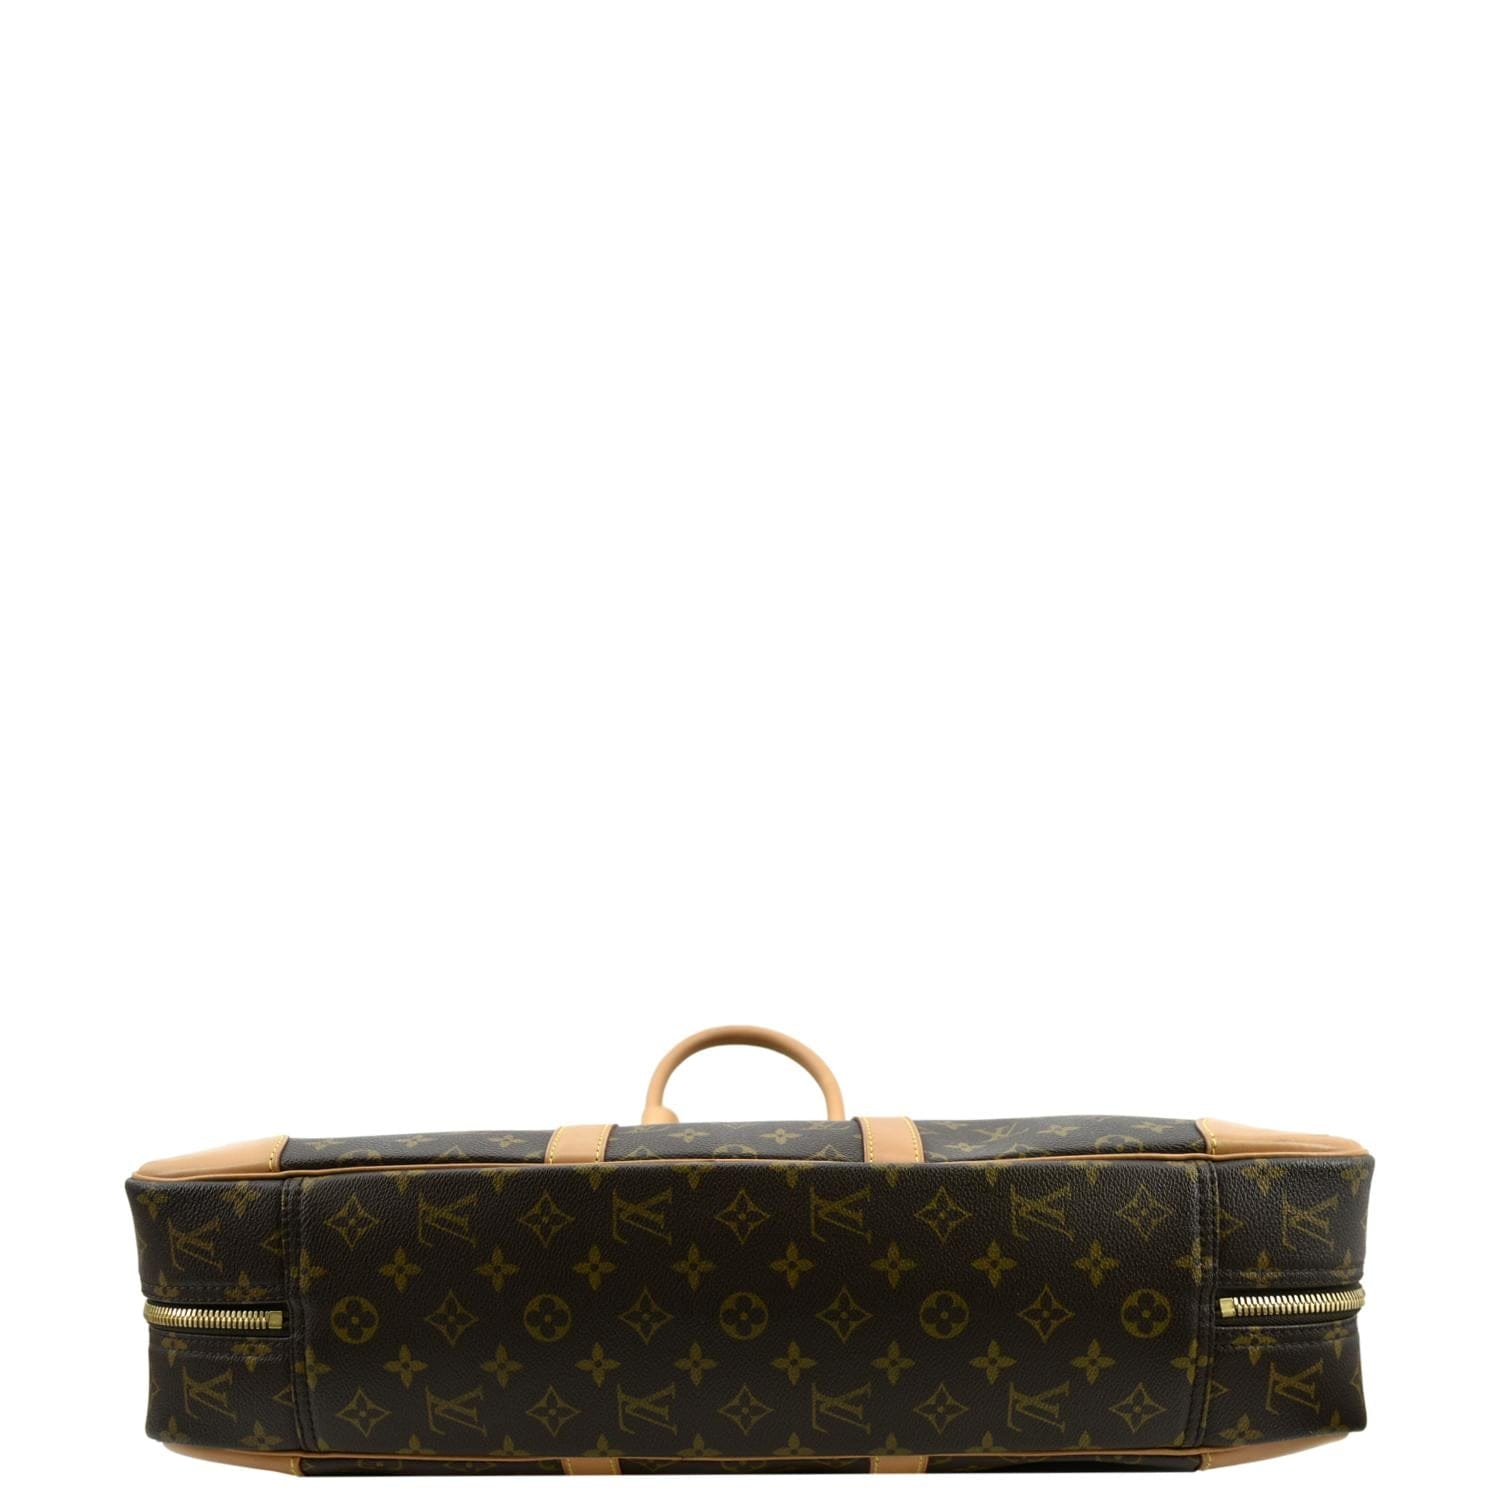 LOUIS VUITTON Sirius 45 Travel Suitcase Handbag